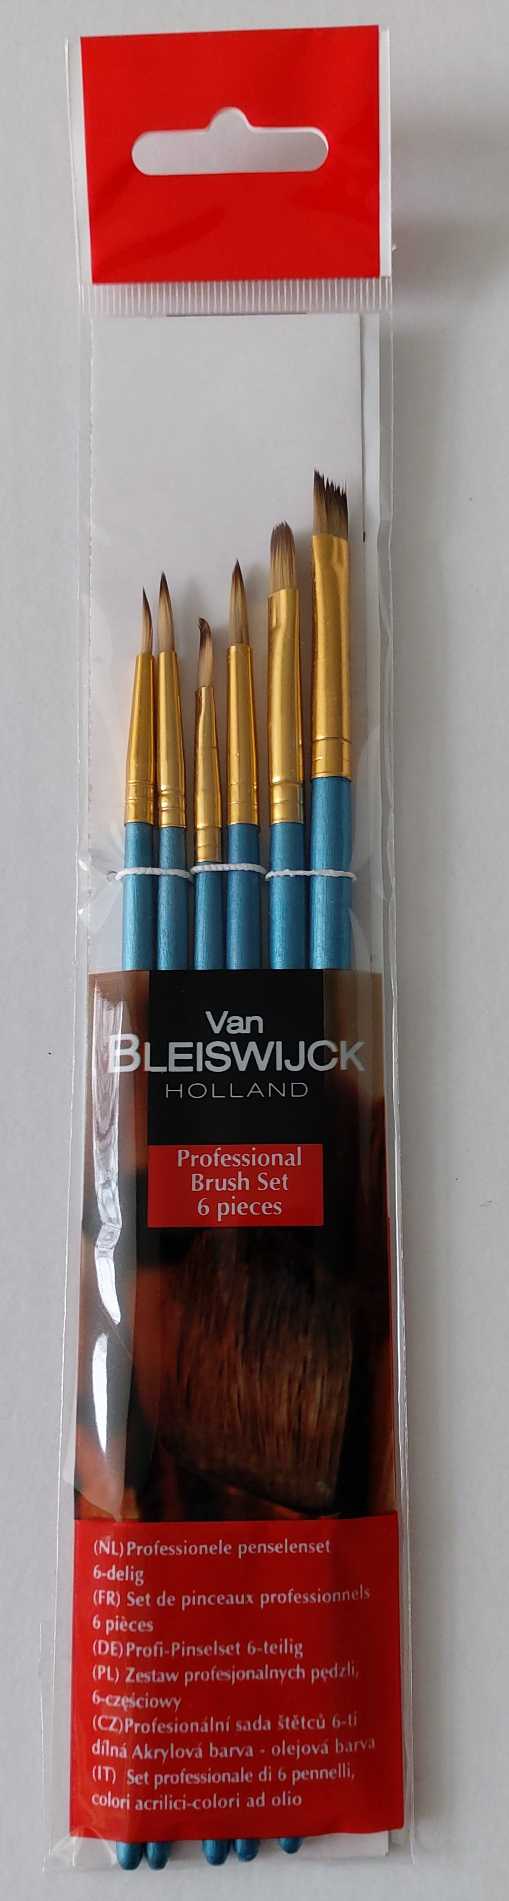 Professsional Brush Set 6 Pieces